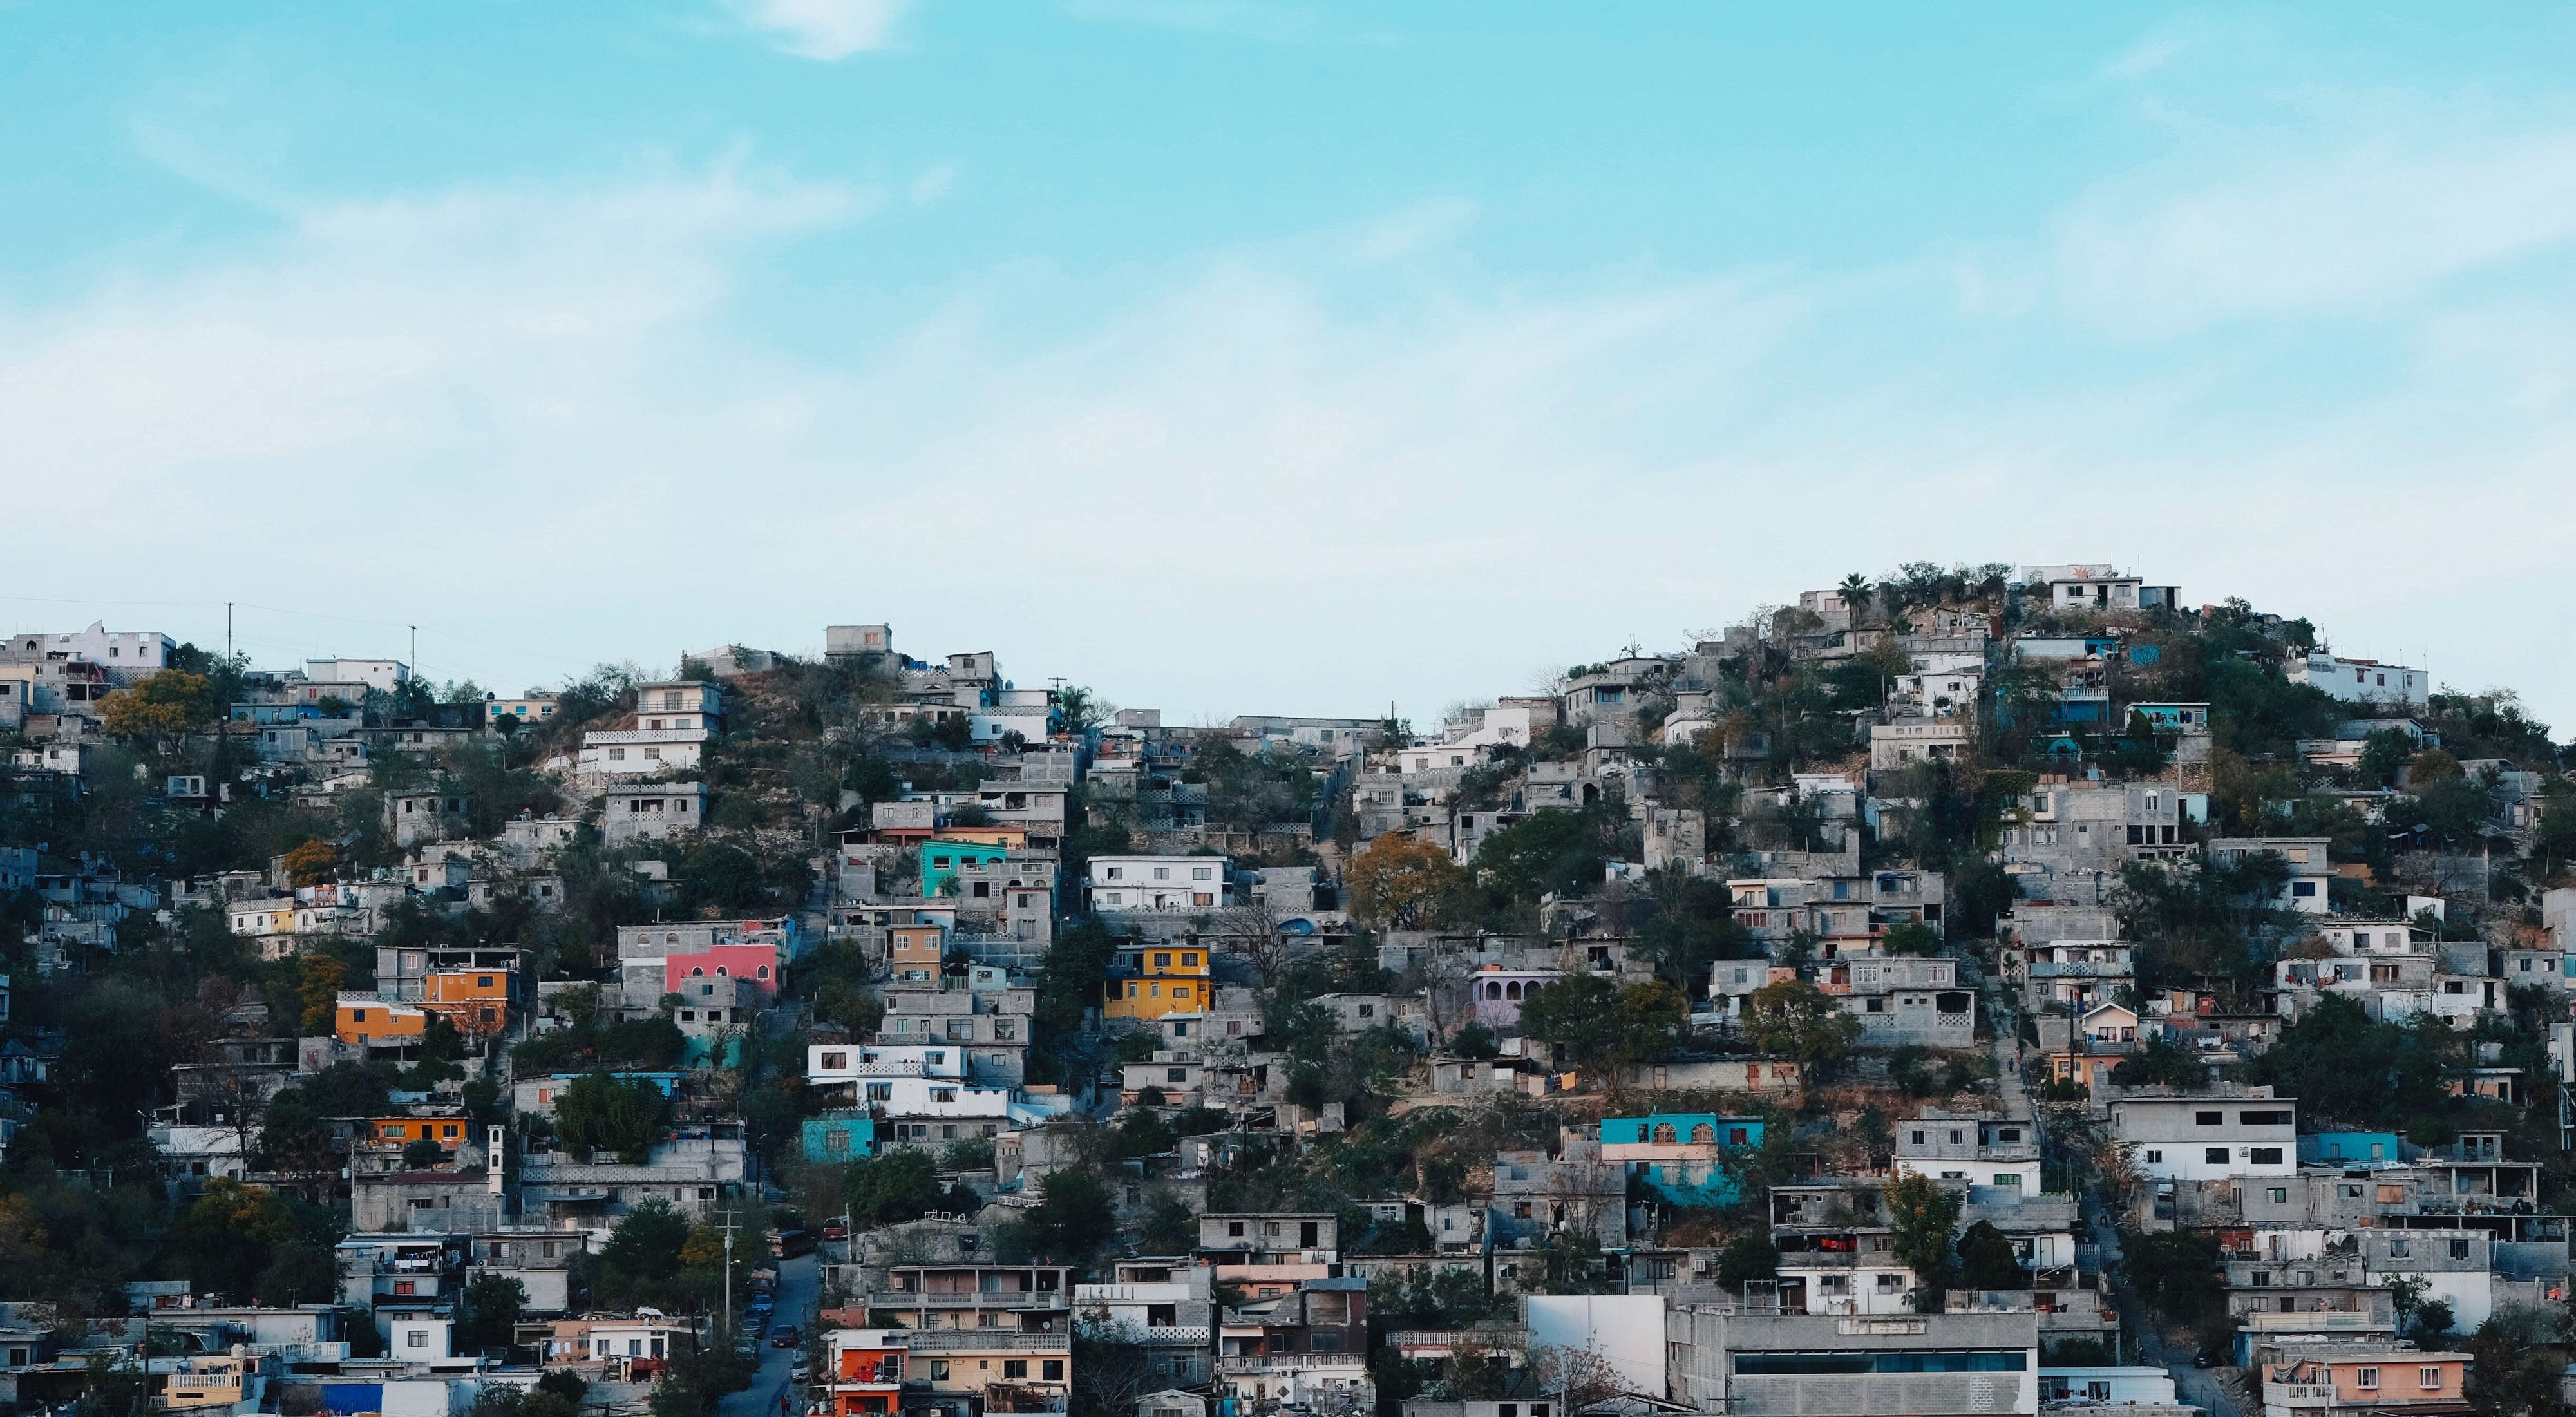 Developed hillsides loom over the city of Monterrey.